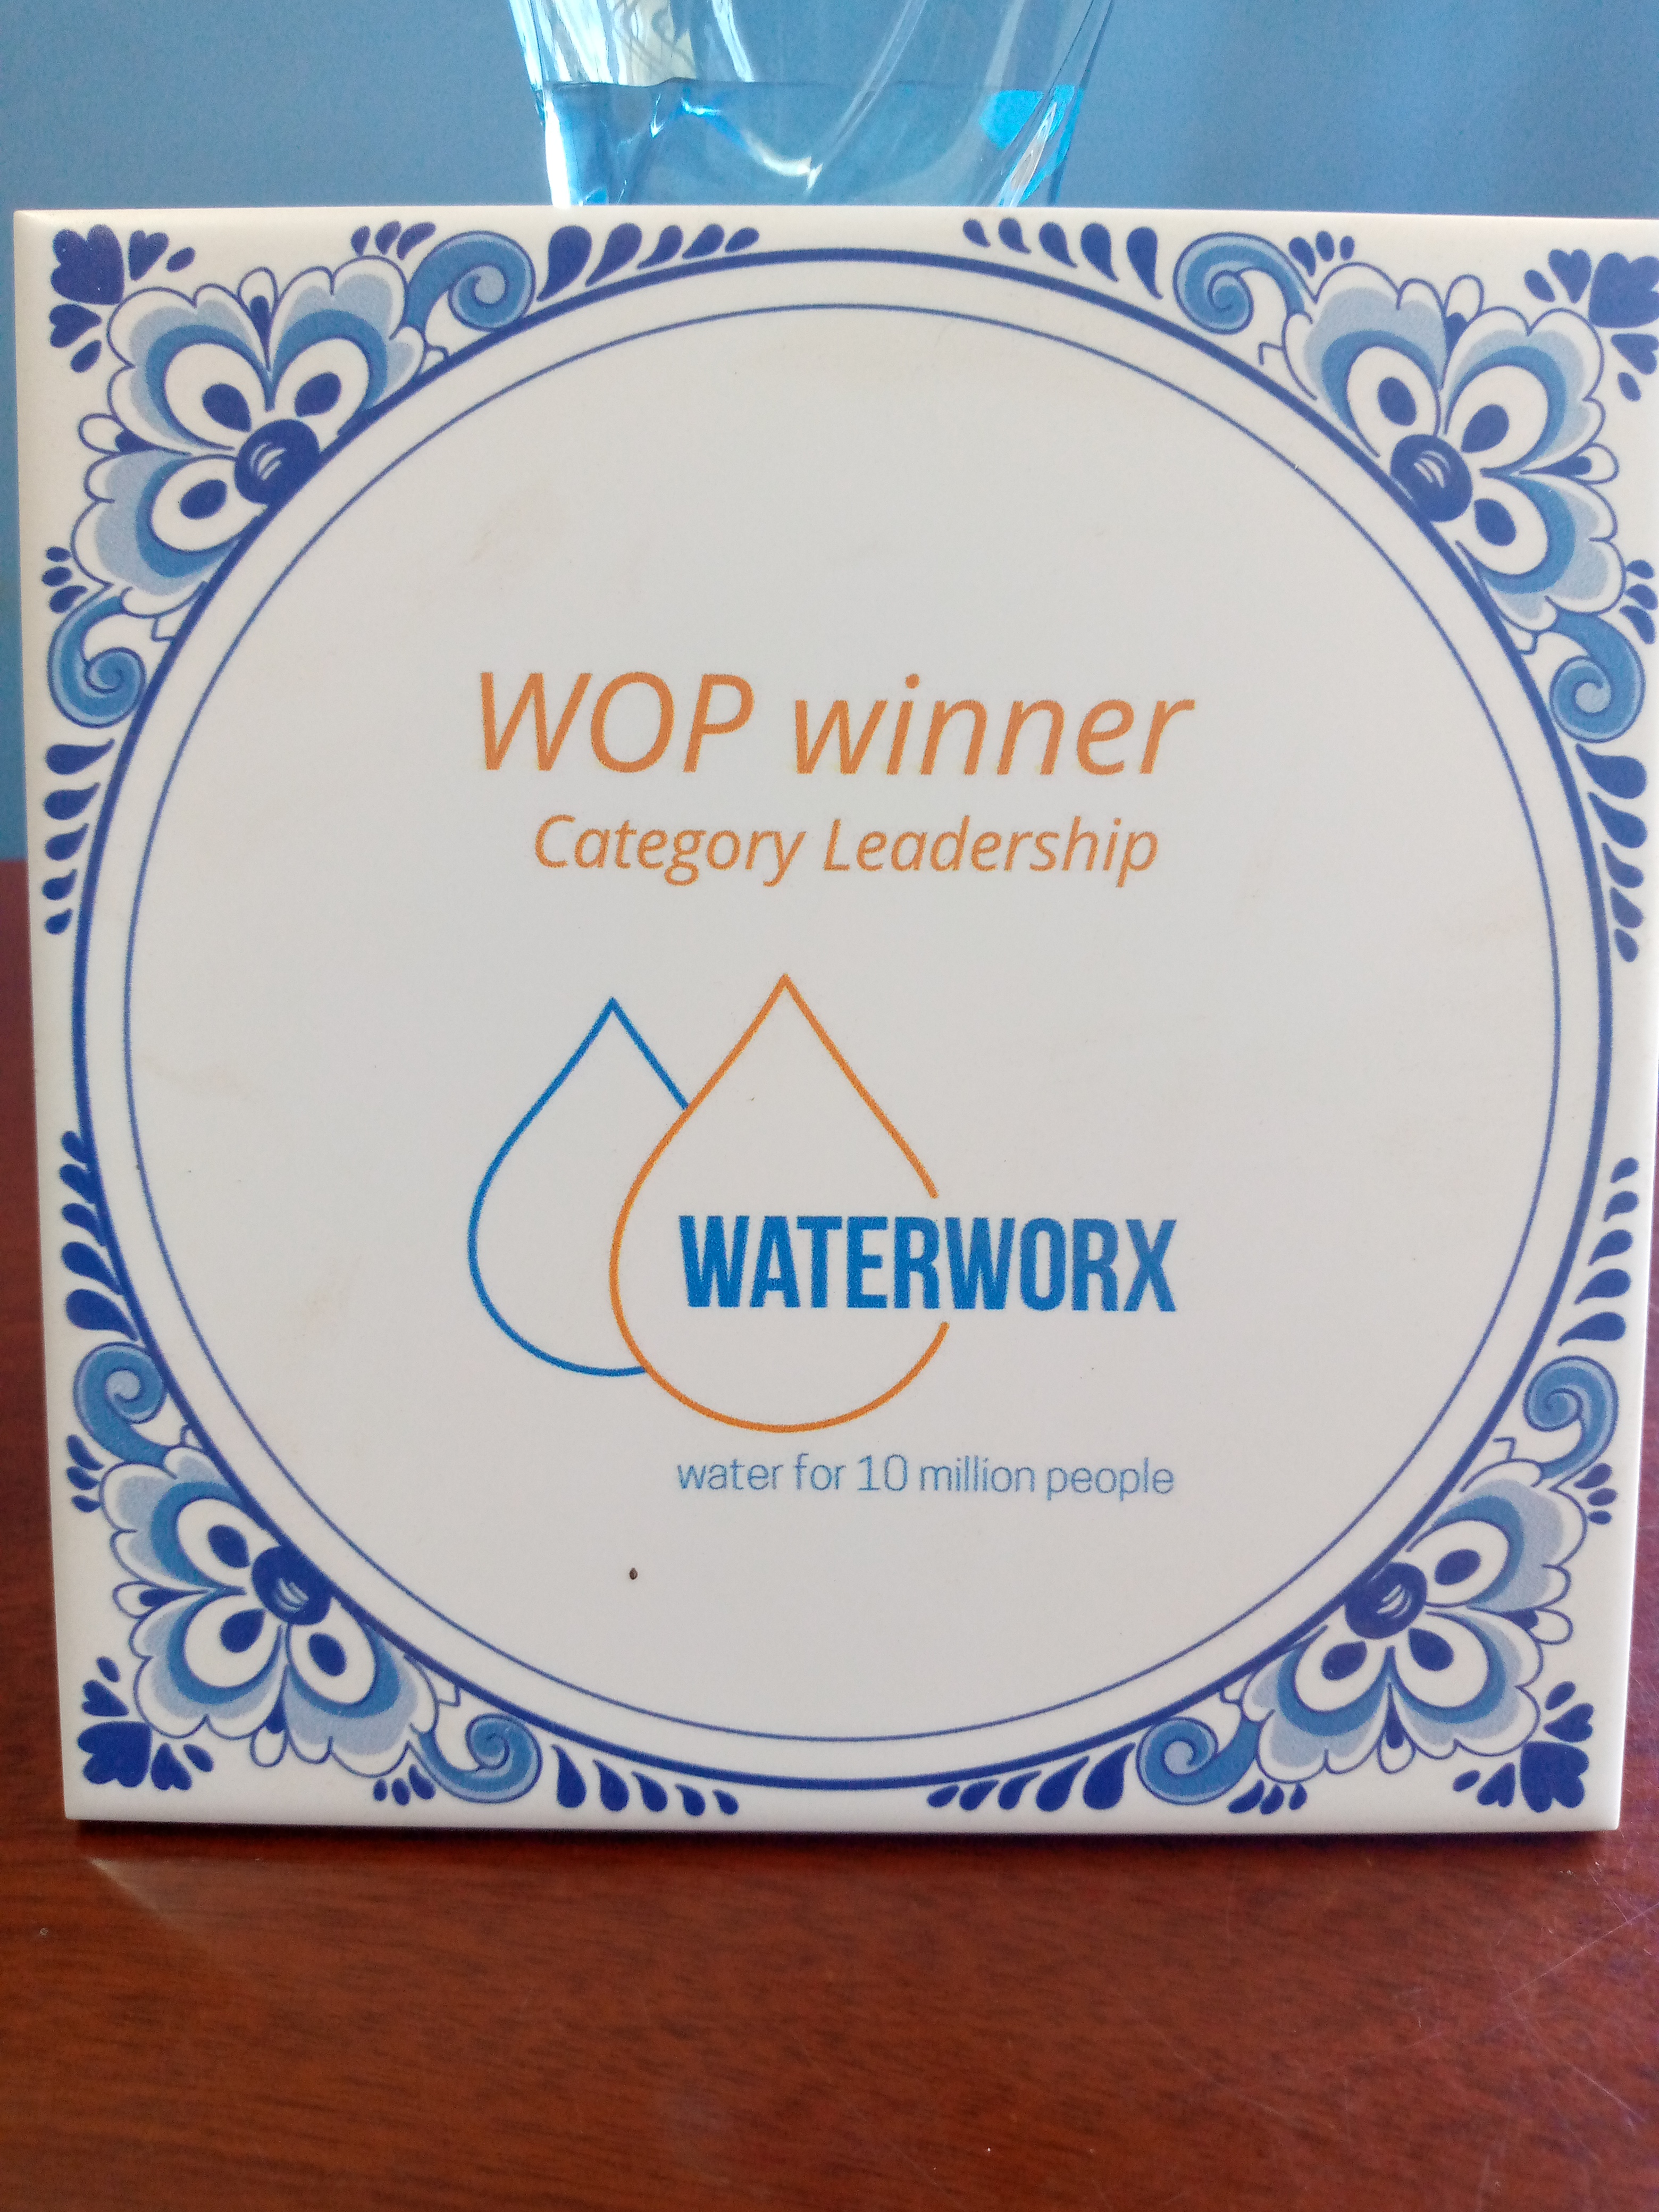 WOP winner category Leadership